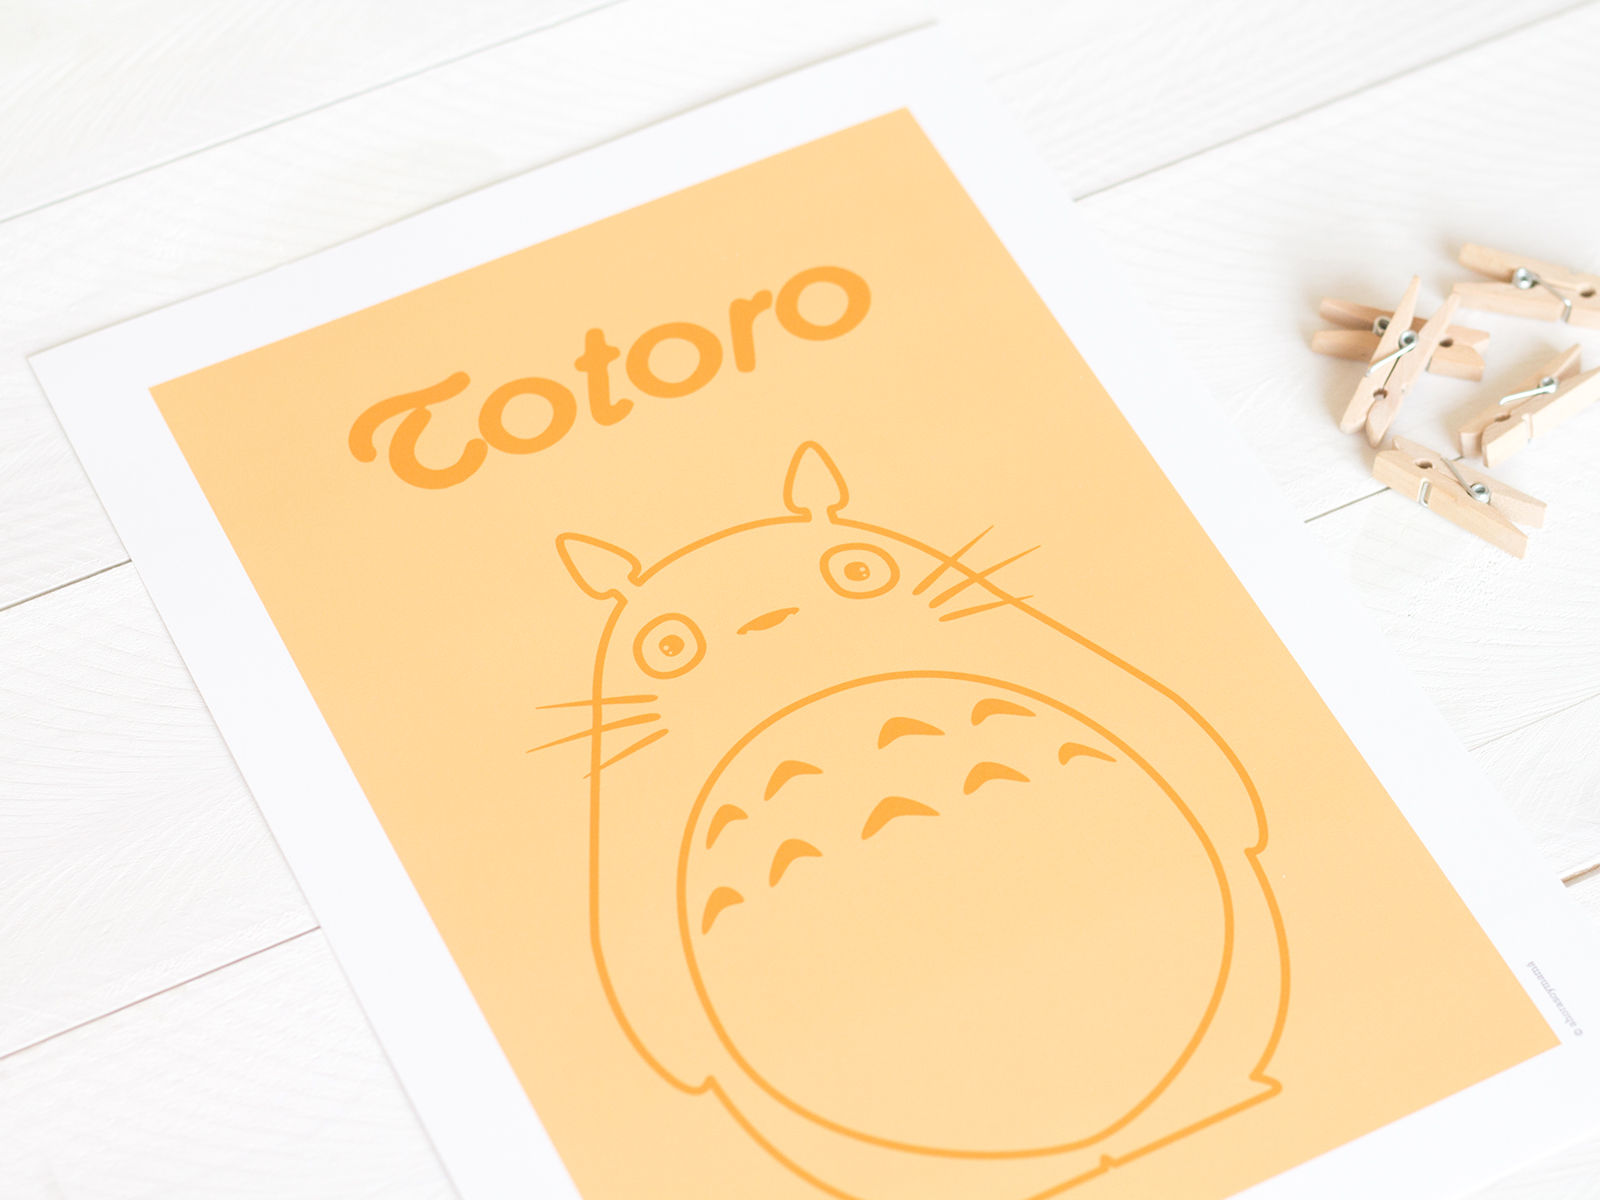 lamina totoro amarillo 1 - Lámina Totoro amarillo